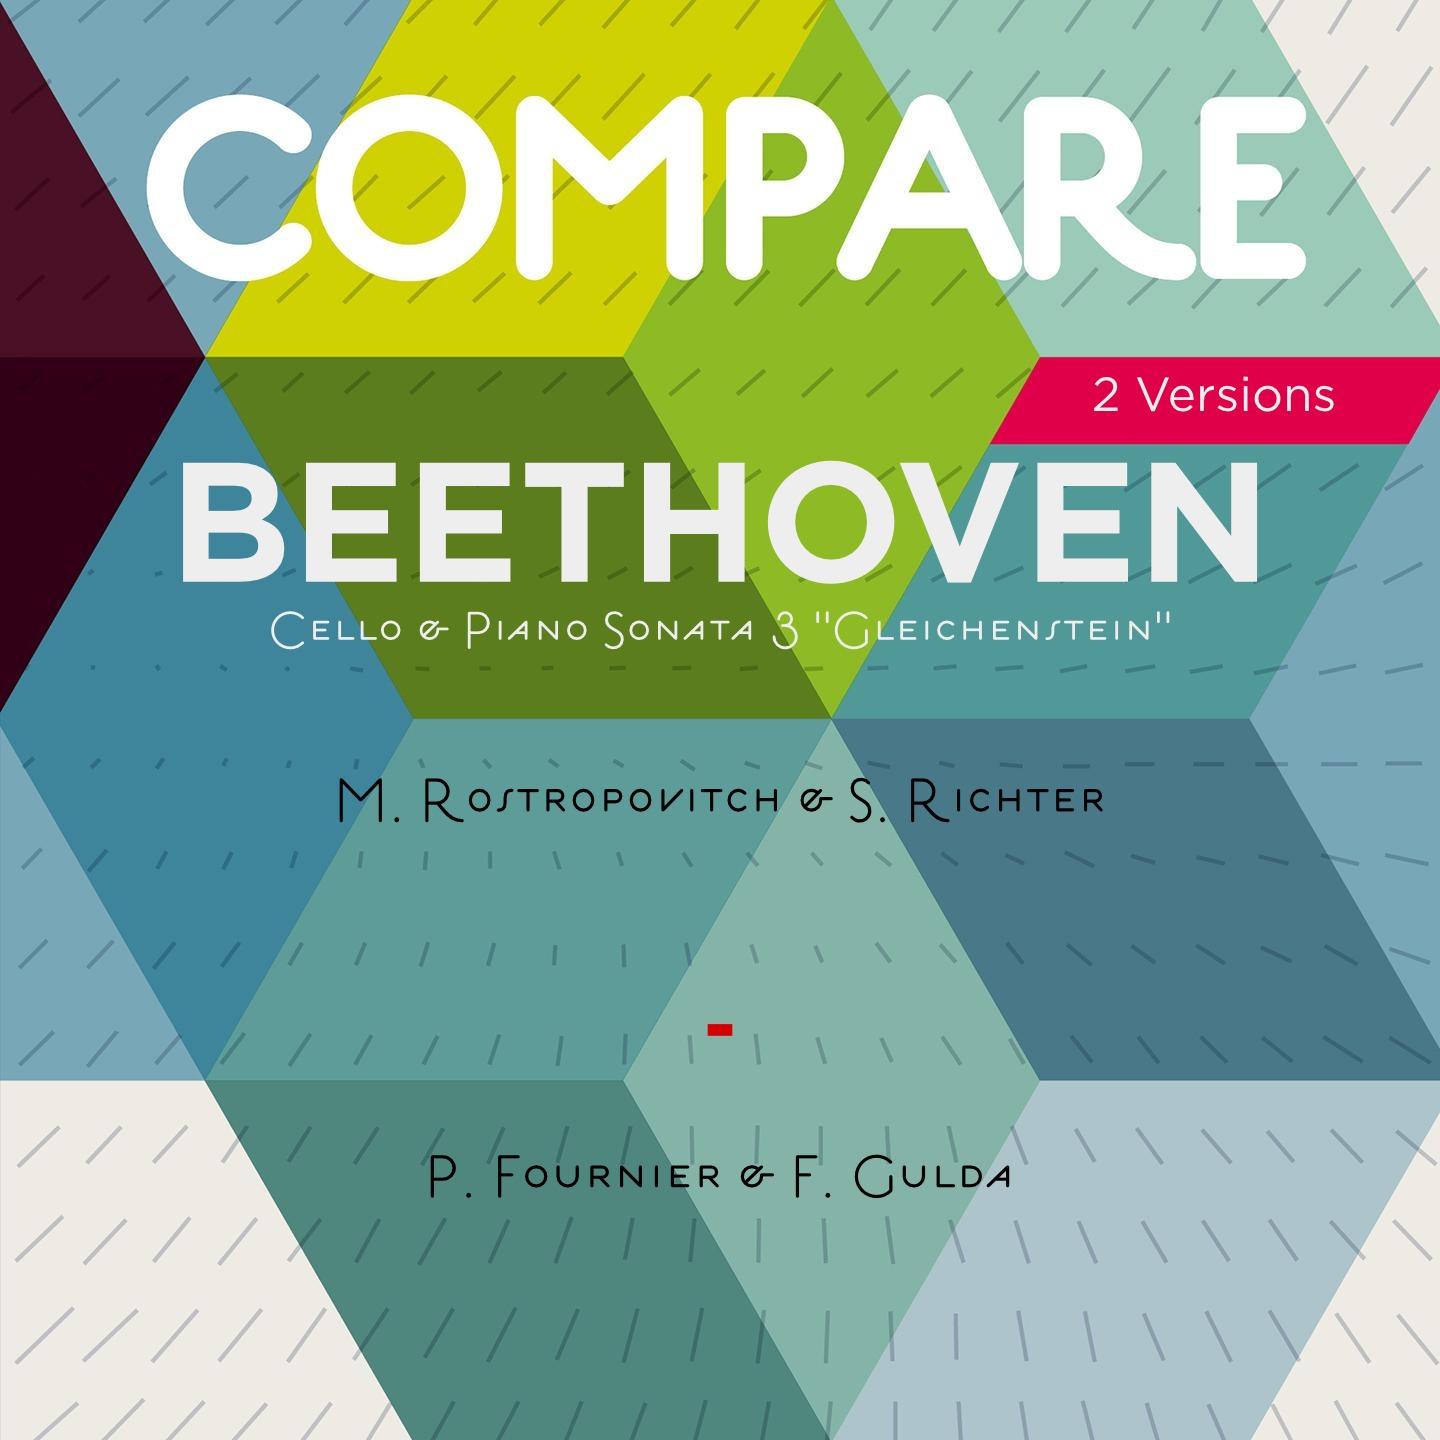 Beethoven: Cello and Piano Sonata No. 3 "Gleichenstein", Mtislav Rostropovitch & Sviatoslav Richter vs. Pierre Fournier & Friedrich Gulda (Compare 2 Versions)